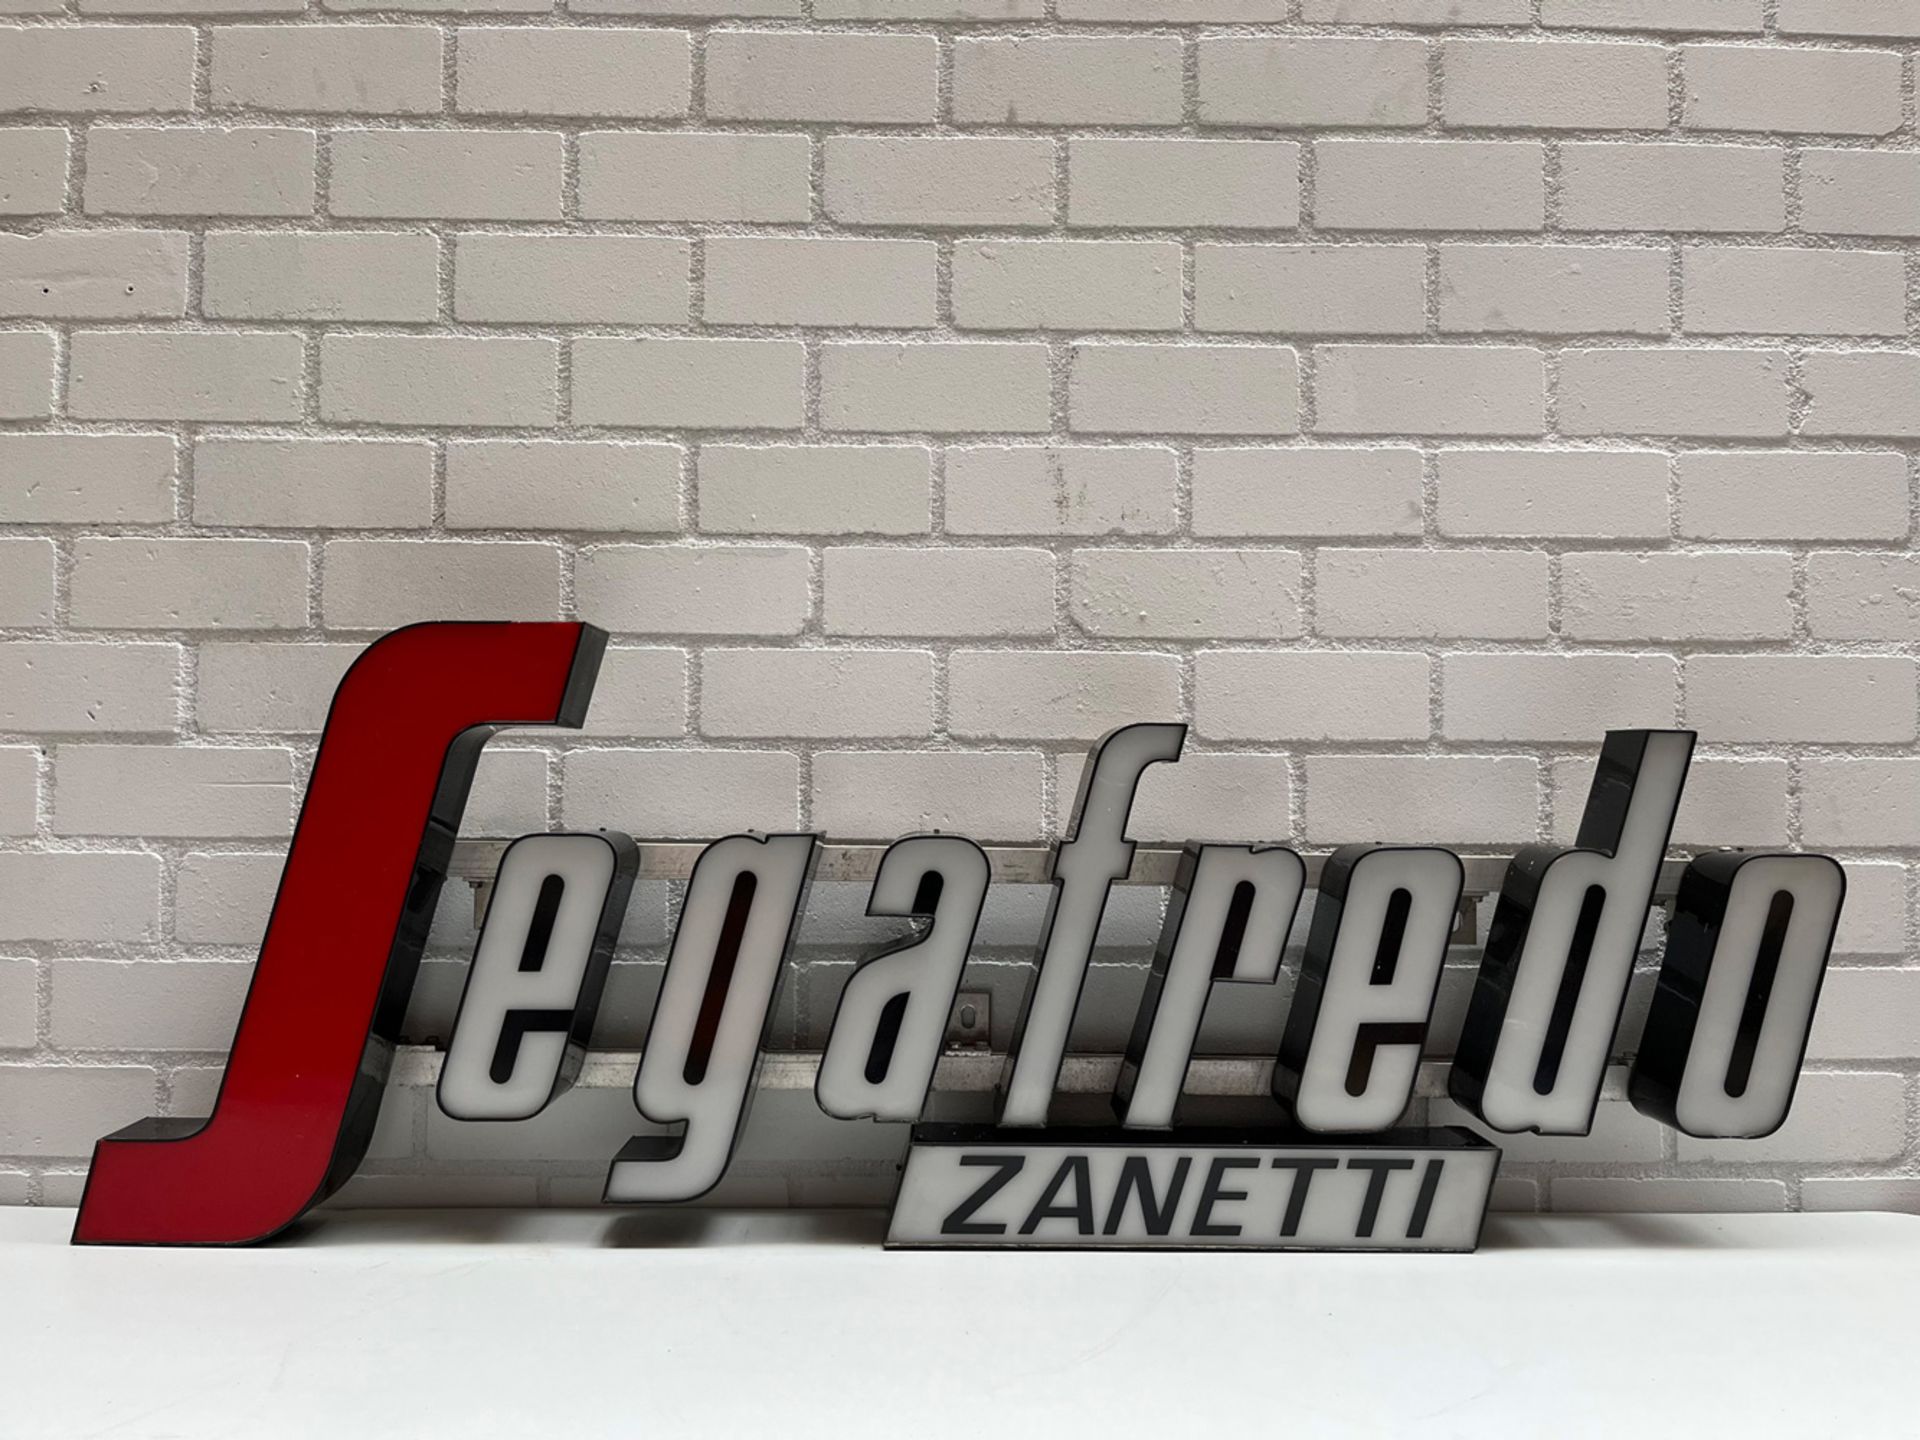 Segafredo Zanetti Front Lit Channel Letters Sign